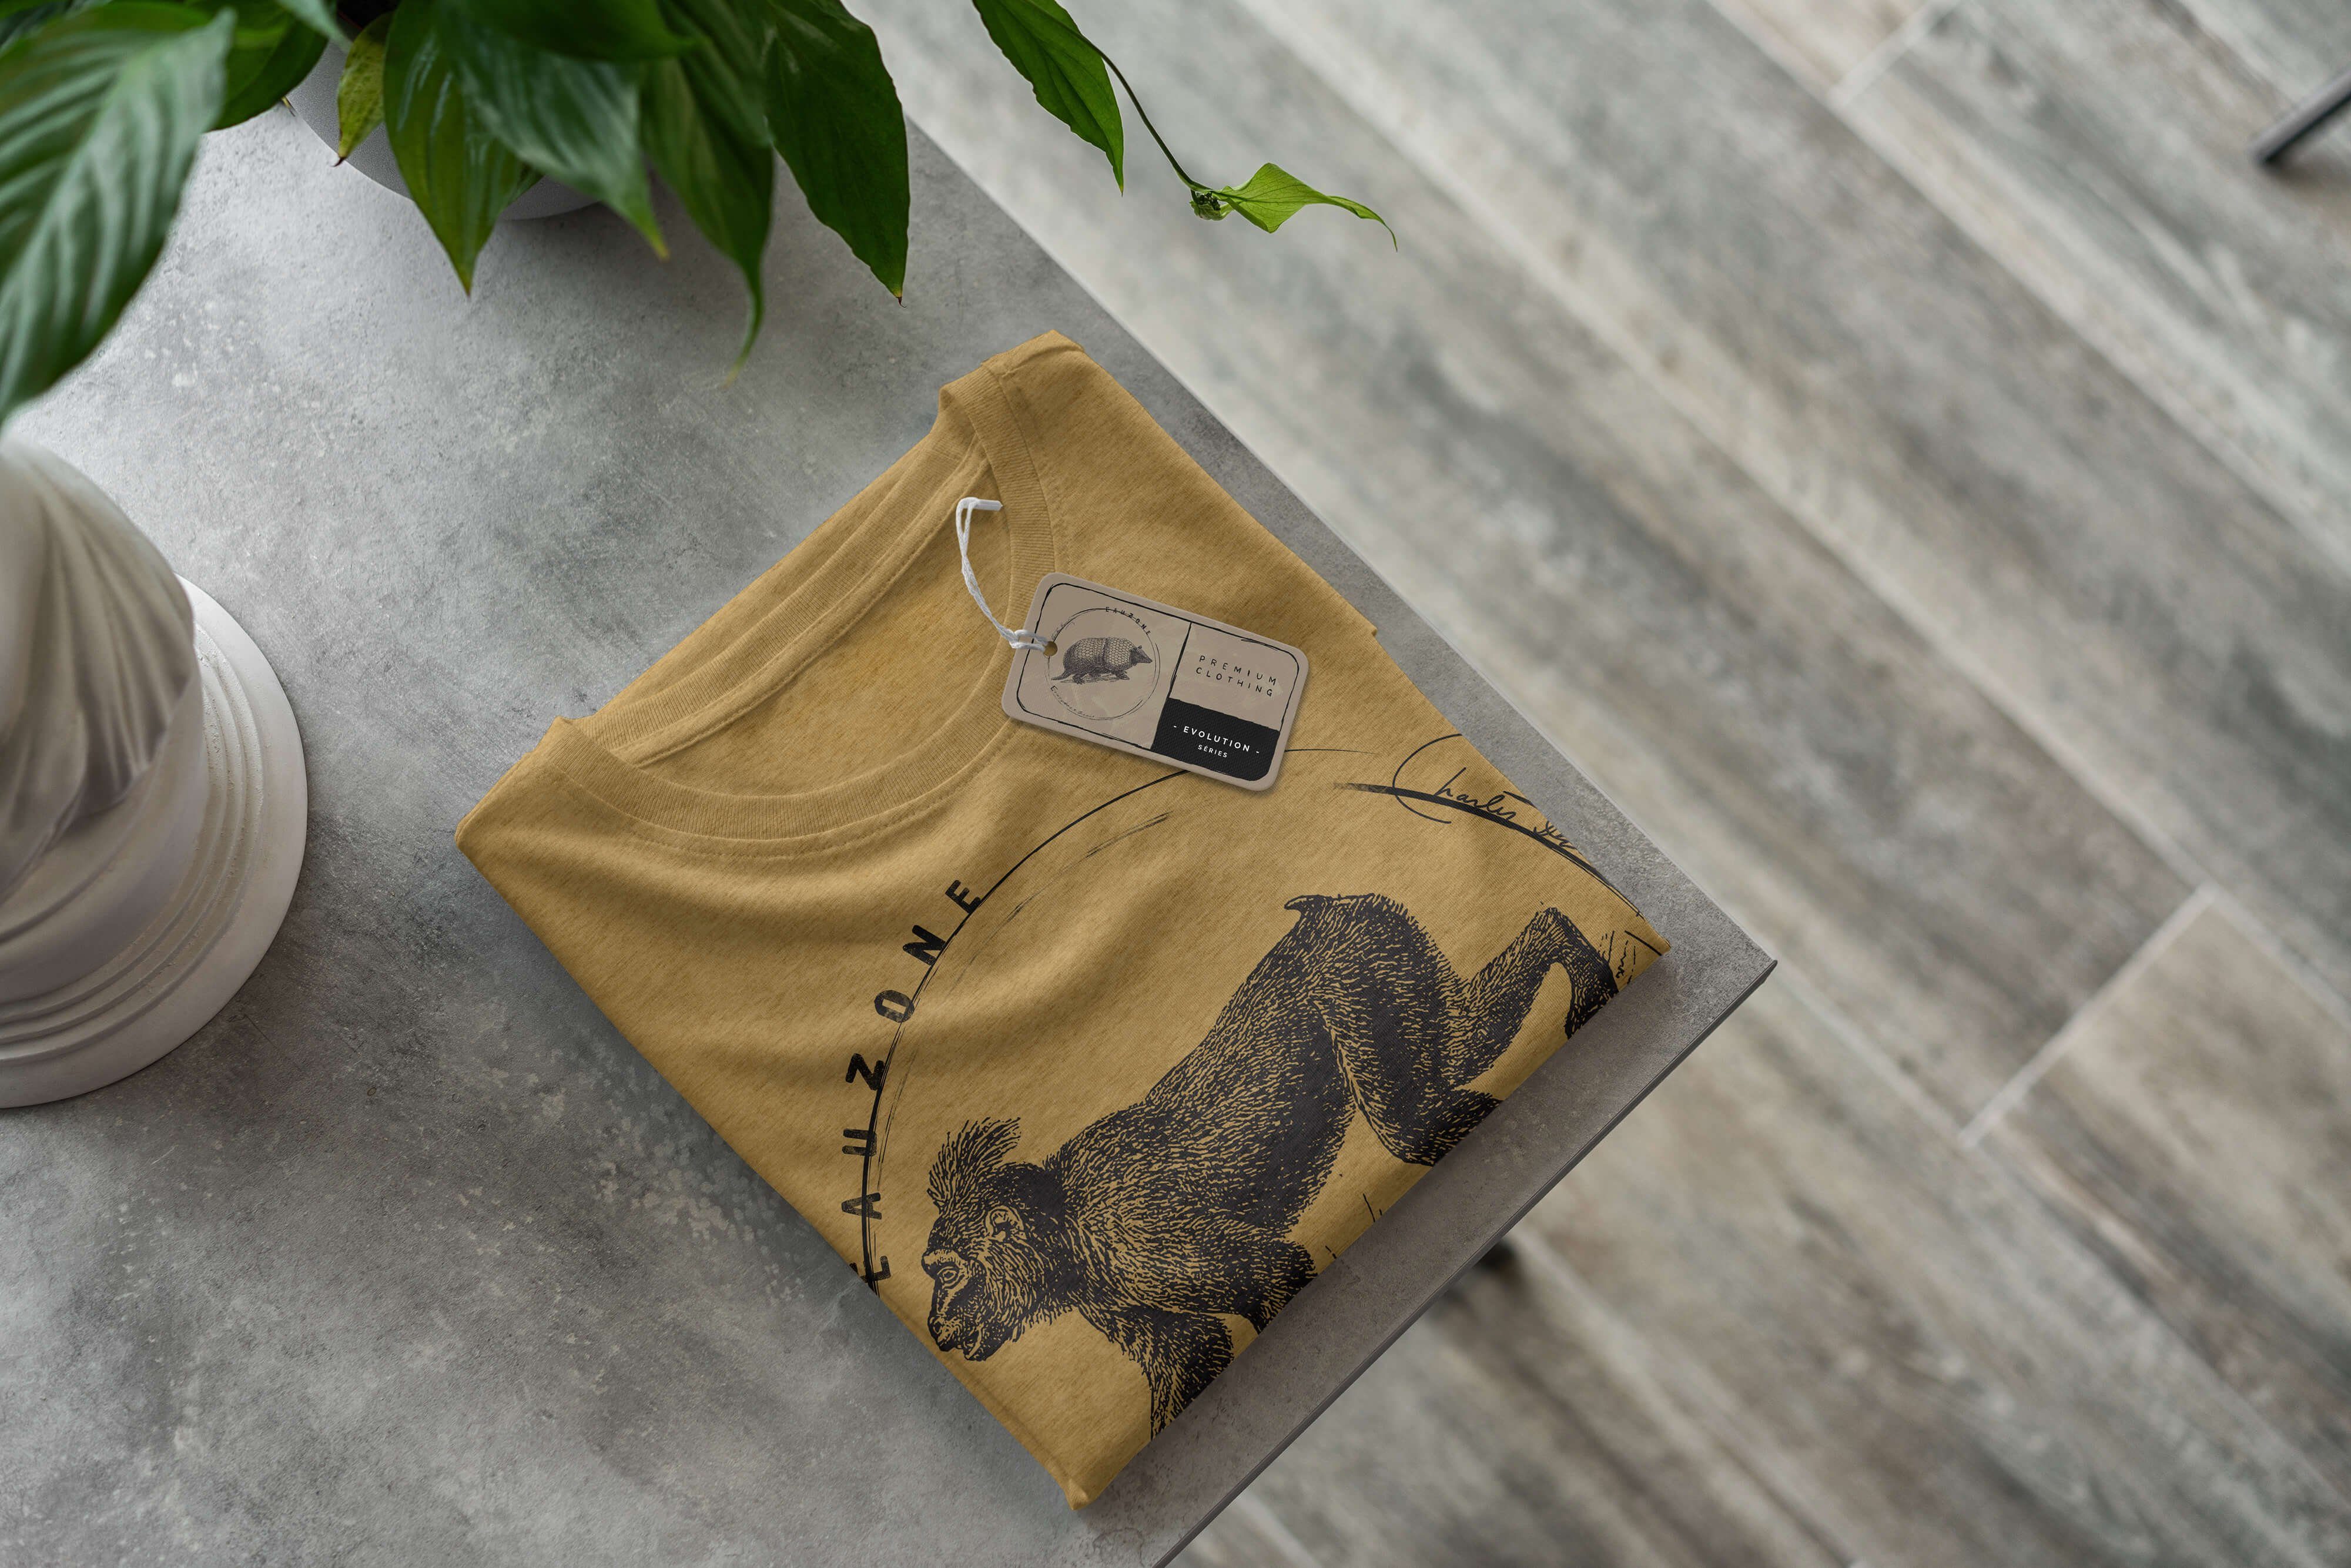 Makake Art Herren Gold Evolution T-Shirt Sinus Antique T-Shirt